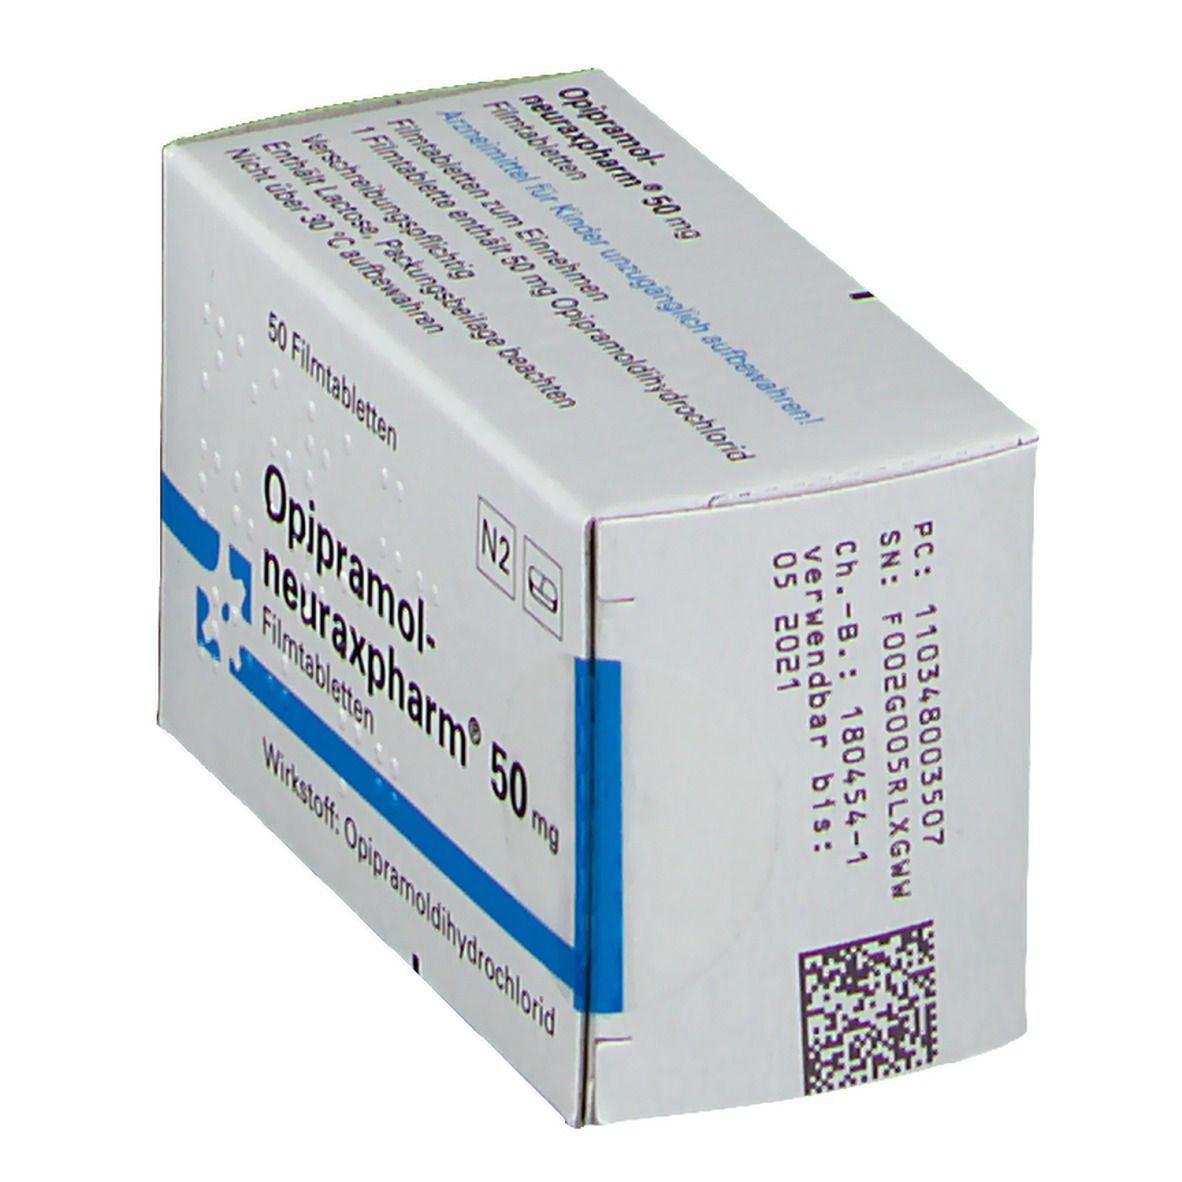 Opipramol-neuraxpharm® 50 mg